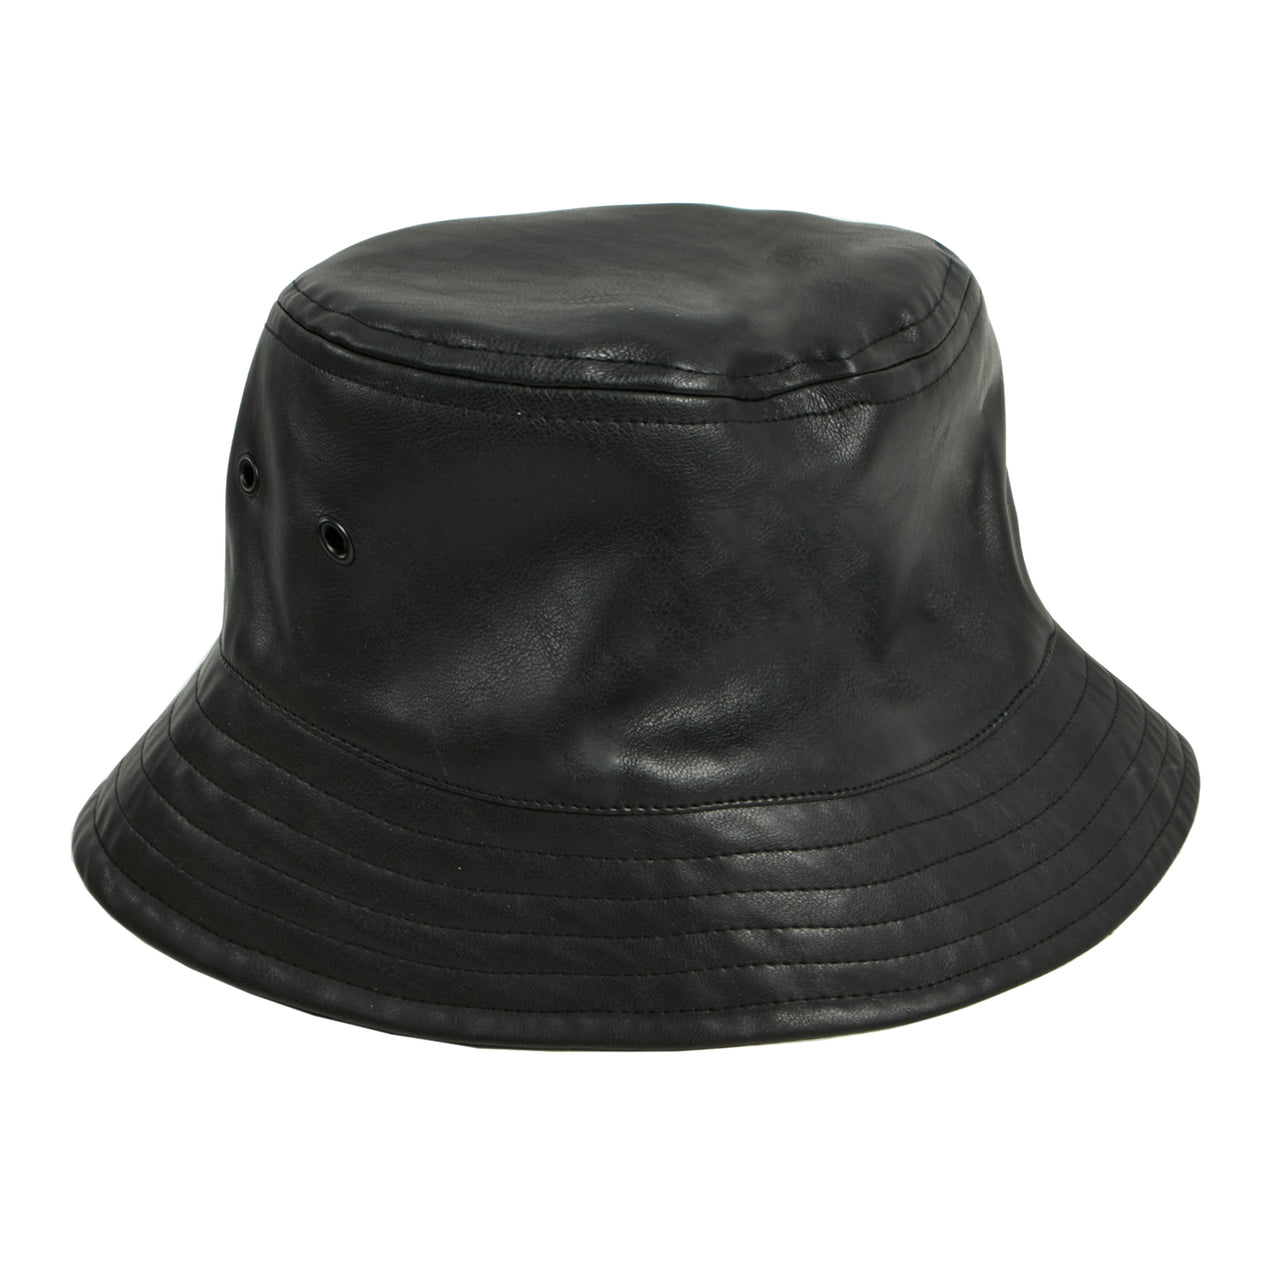 Mini Bucket Hat Black Stormi Made in Canada Zero Waste Childrens Waterproof